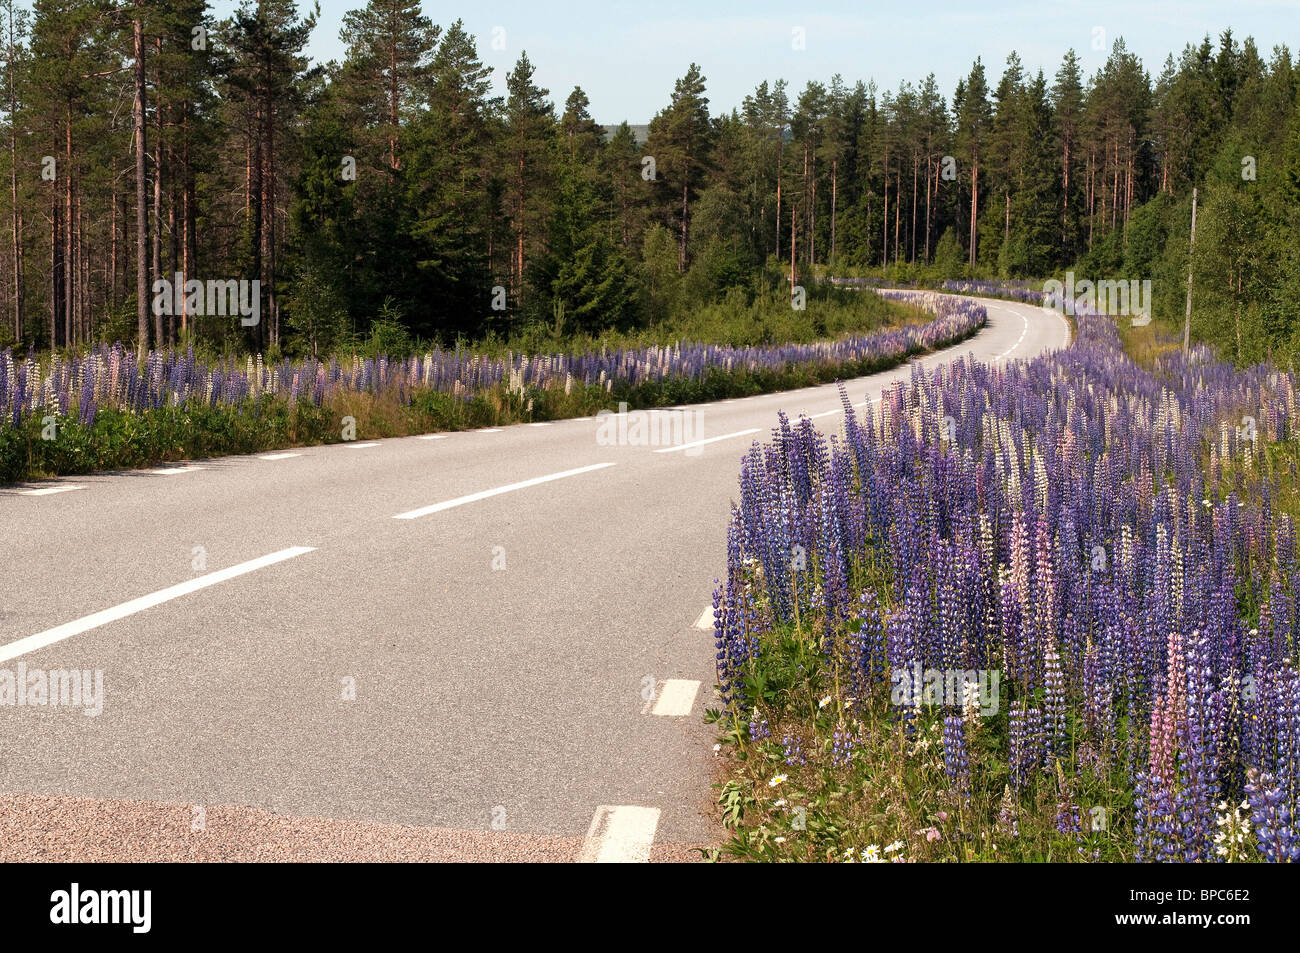 Garden Lupin (Lupinus polyphyllus), flowering alongside a road in Sweden. Stock Photo